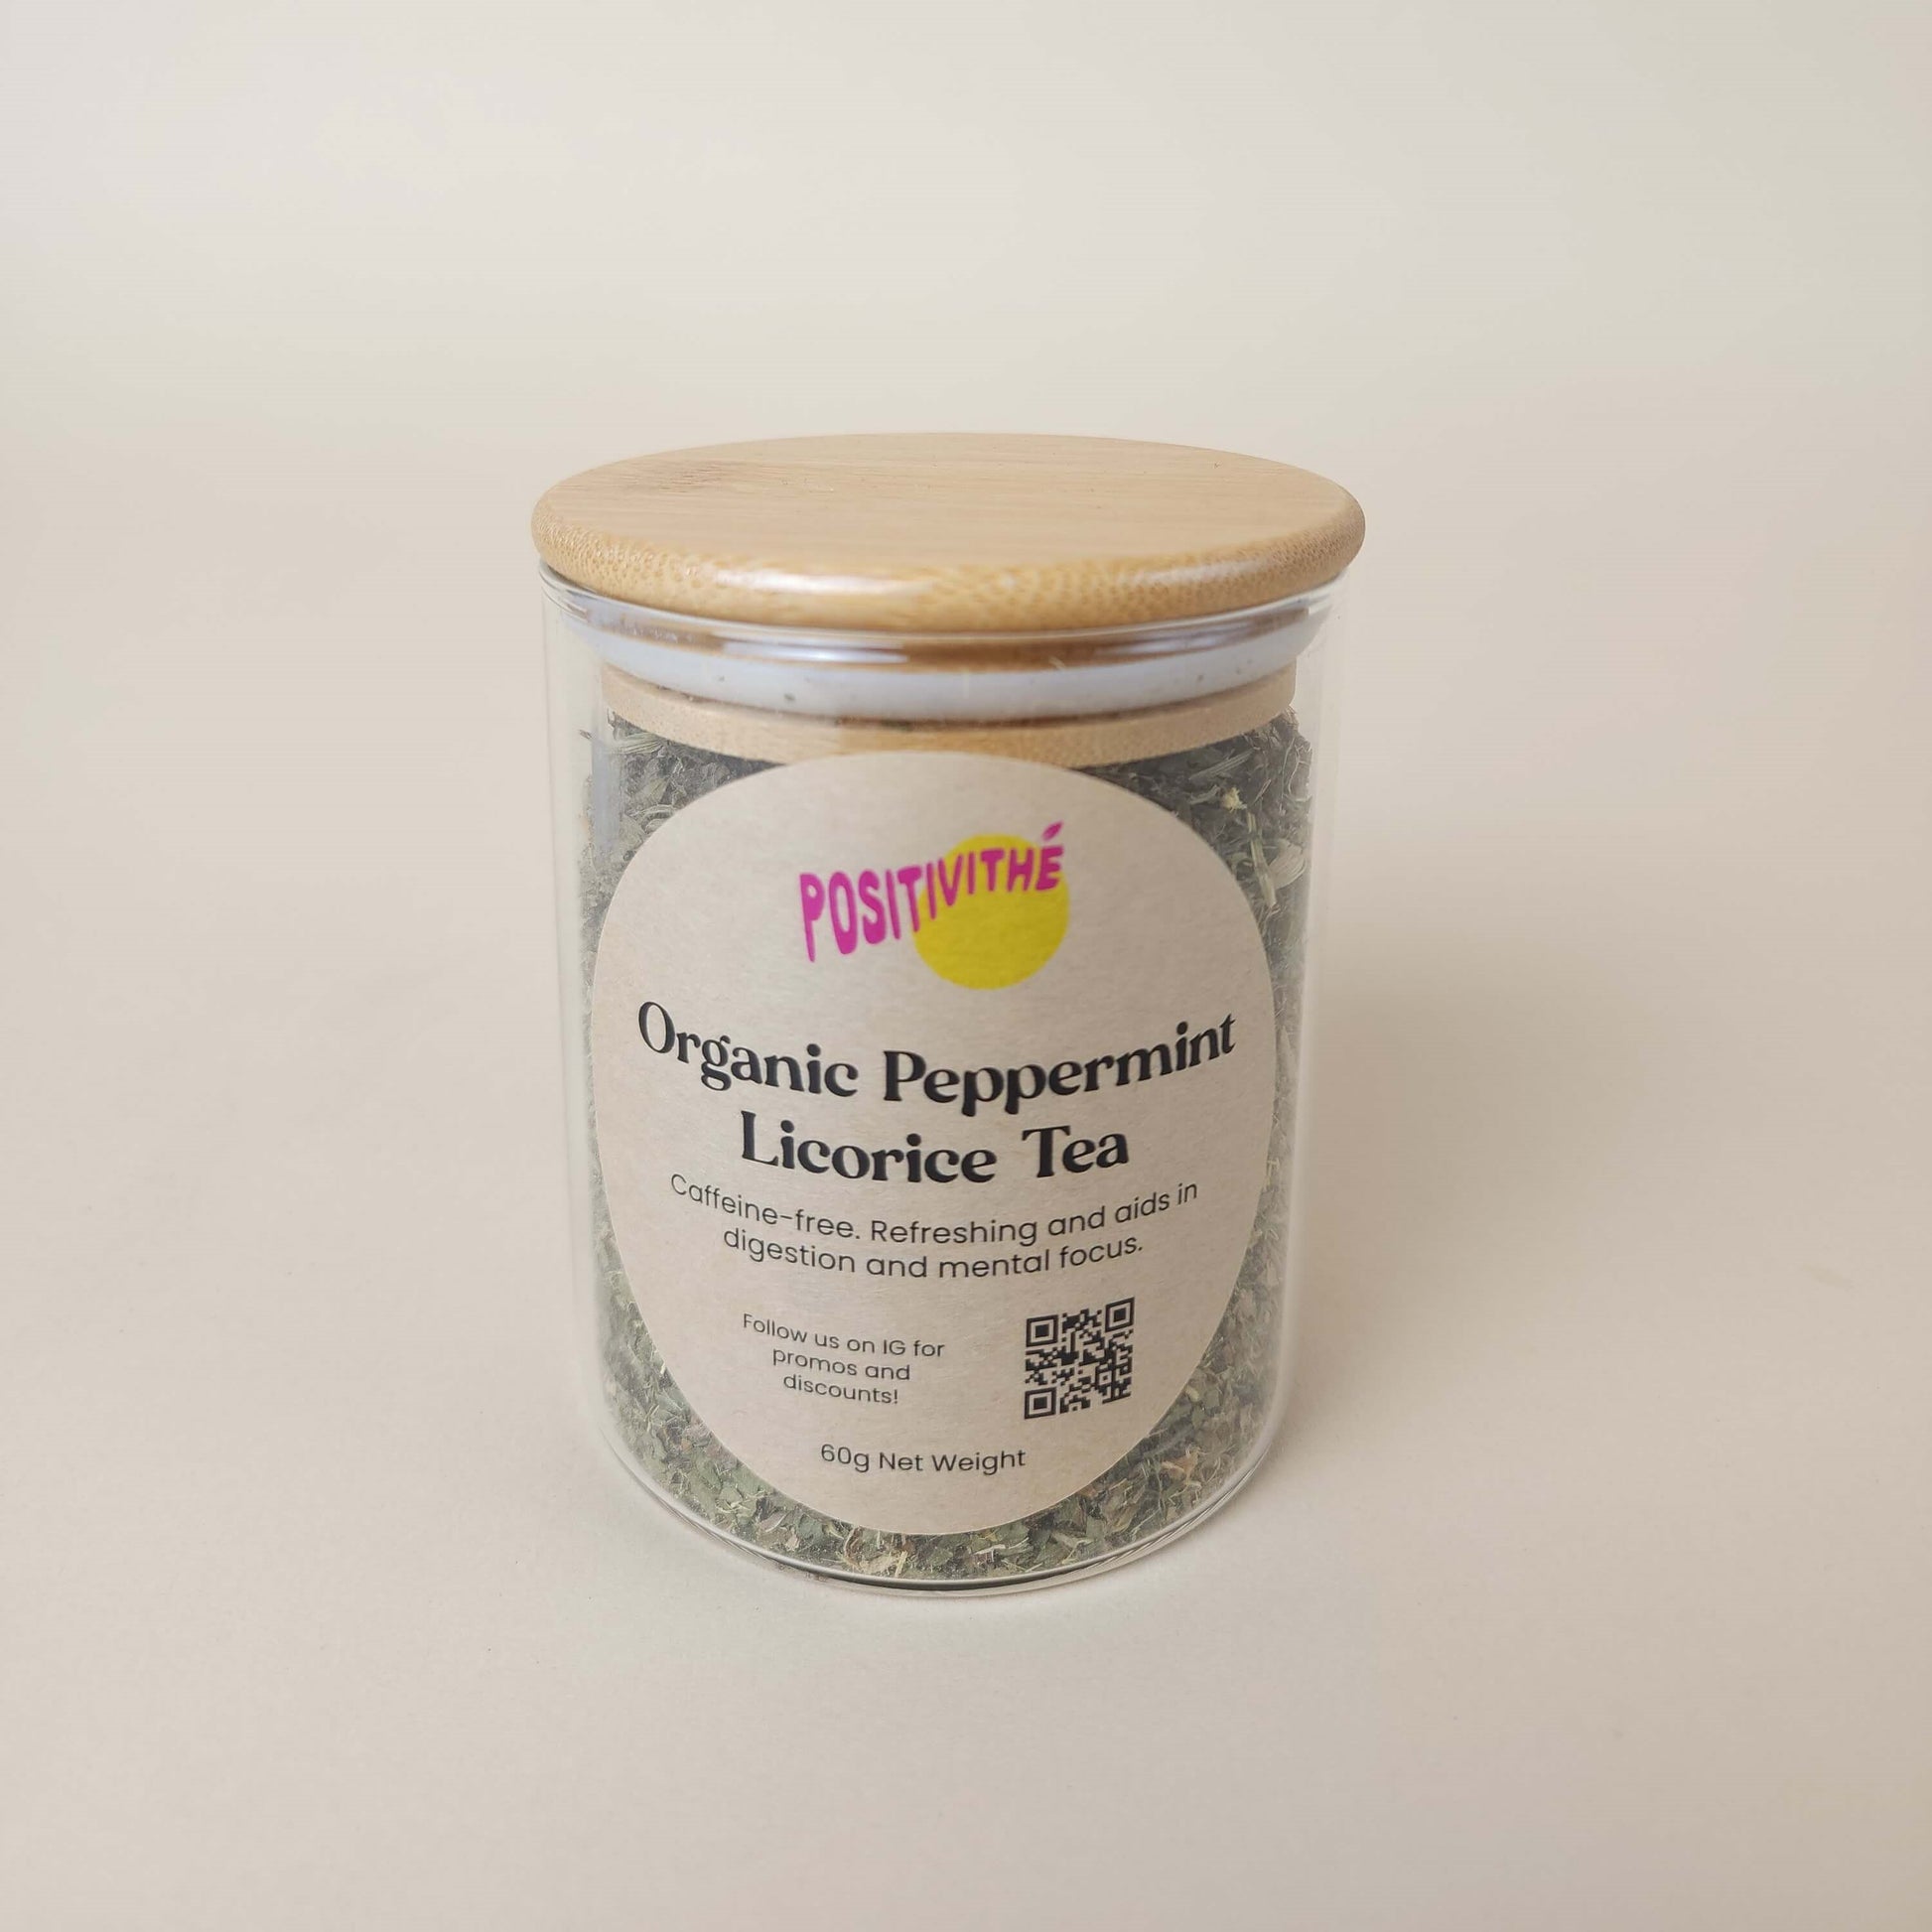 Organic Peppermint Licorice Tea | Positivithé